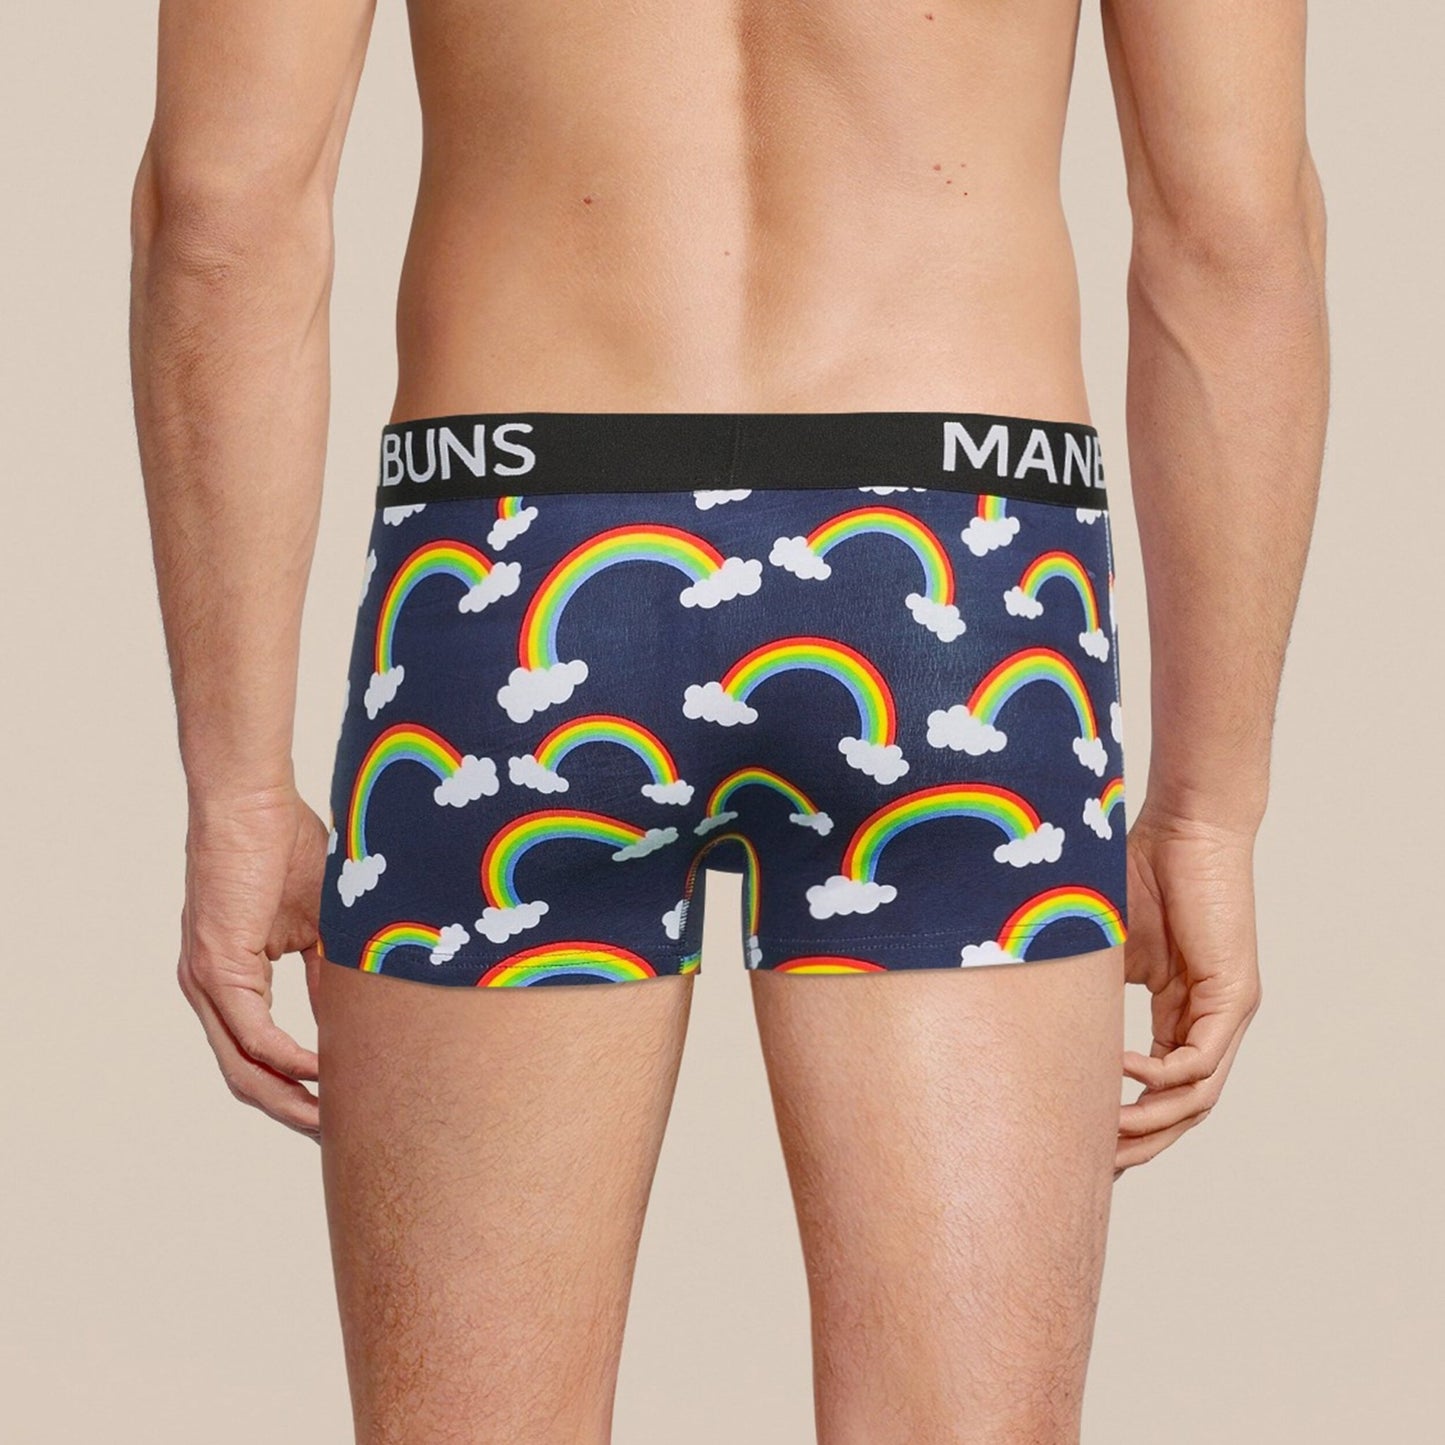 Men's Rainbow Boxer Trunk Underwear - MANBUNS Underwear & Socks Free Shipping